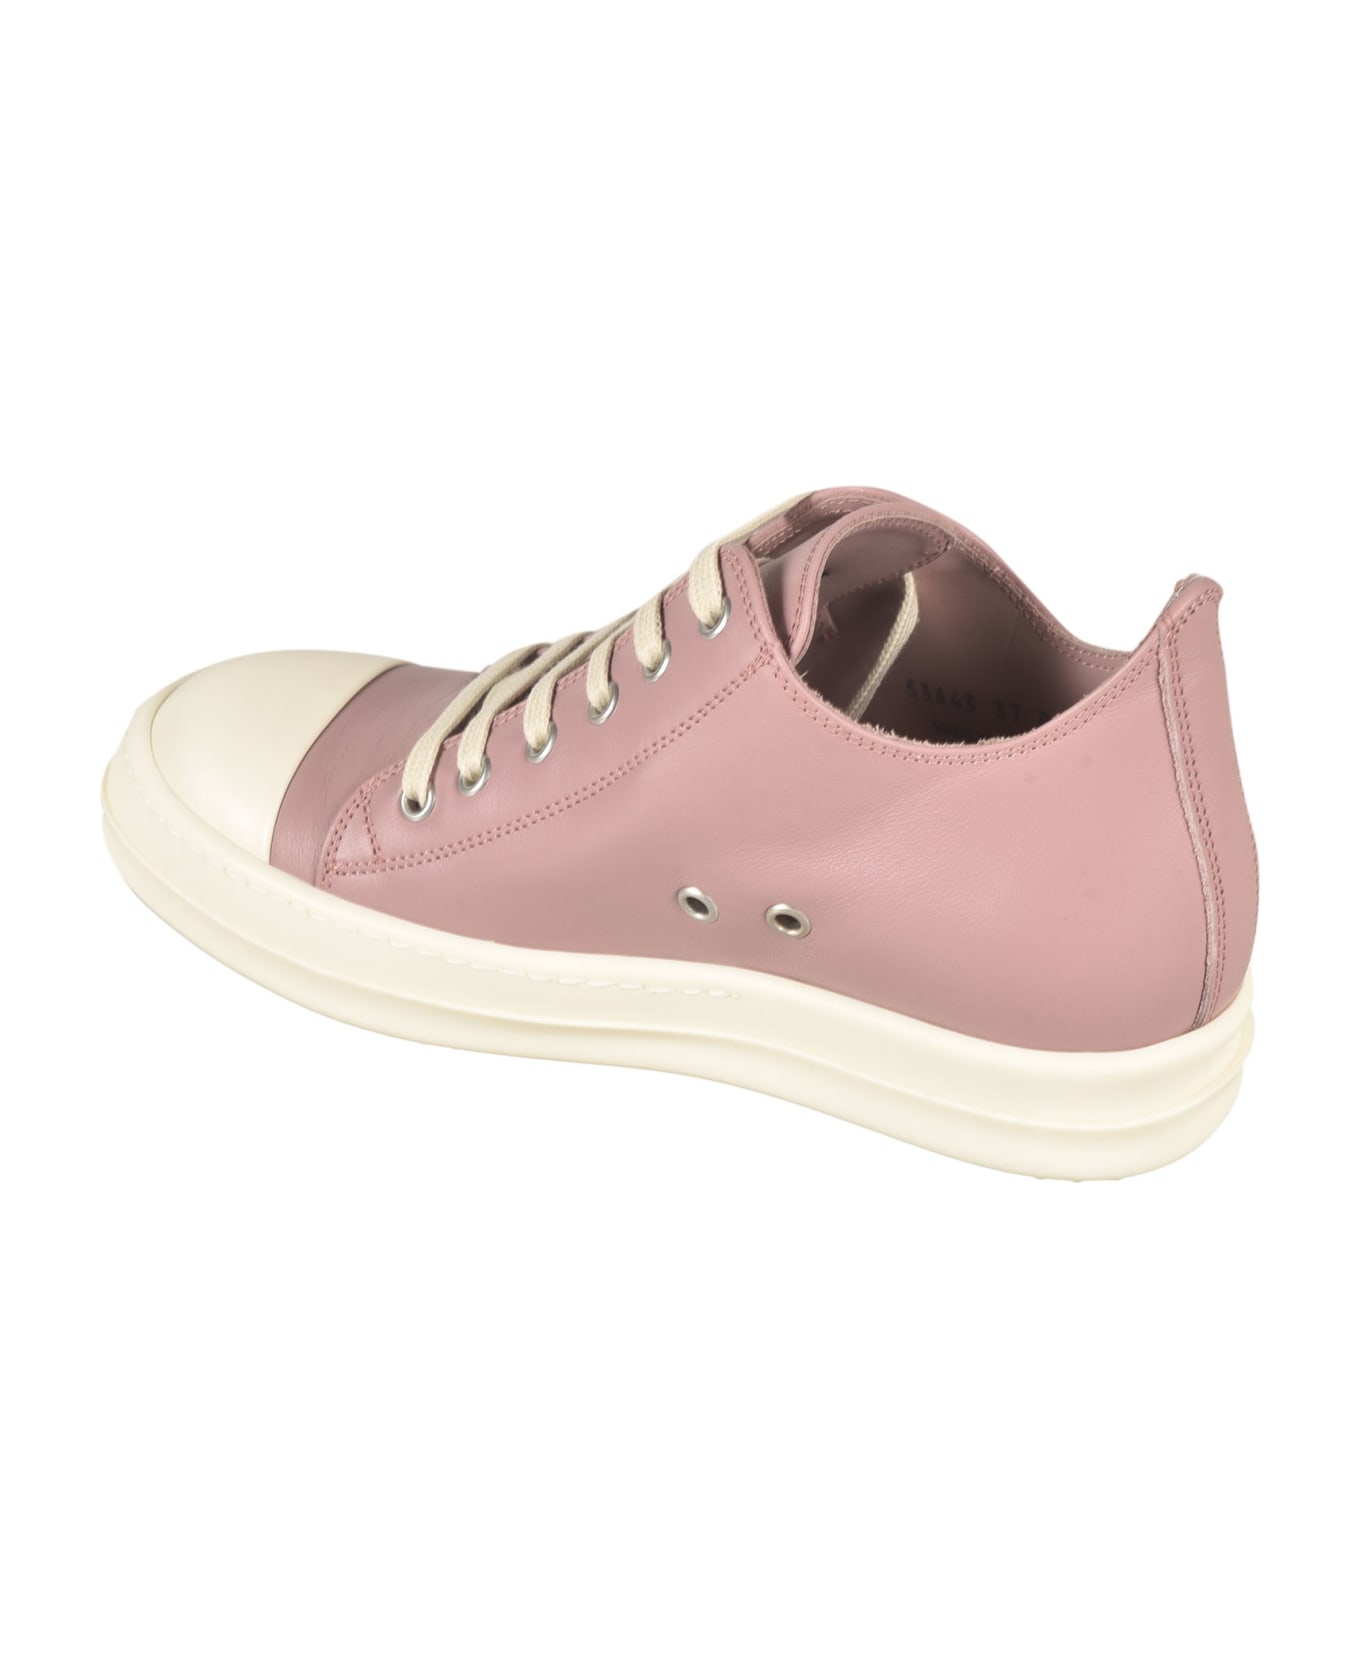 Rick Owens Classic Low Sneakers - Dusty Pink/Milk